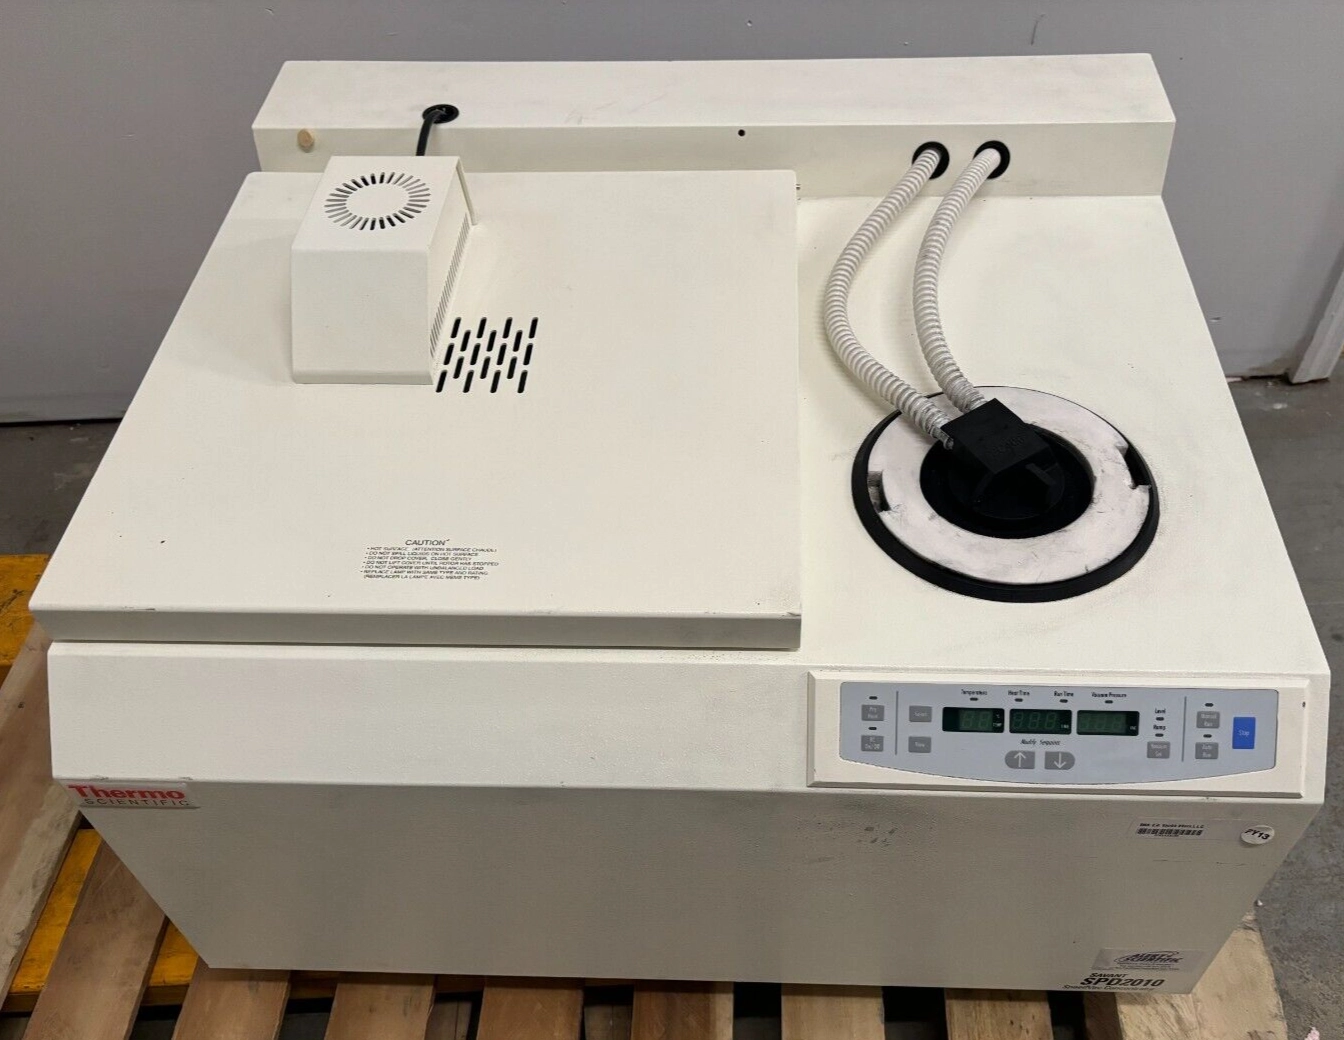 ThermoFisher Scientific Savant SPD1010 Integrated 